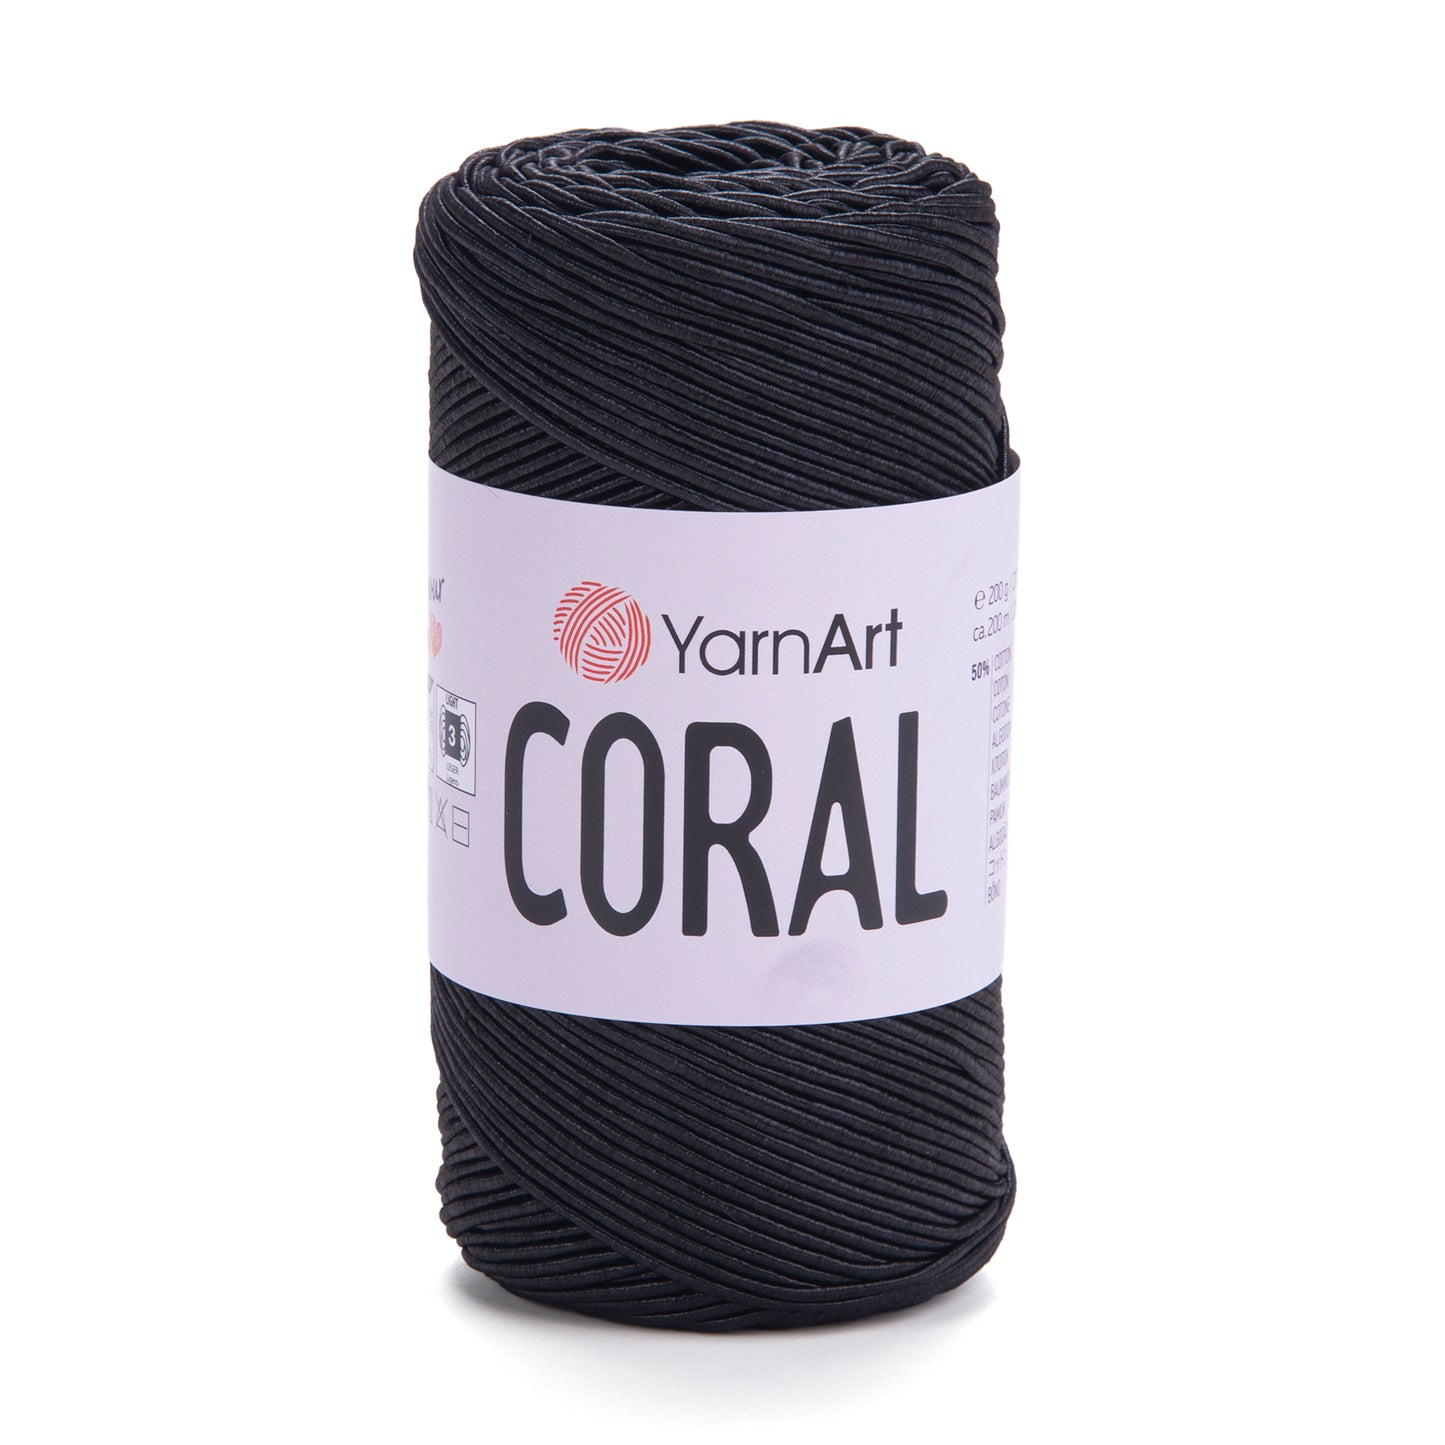 Yarn Art Coral